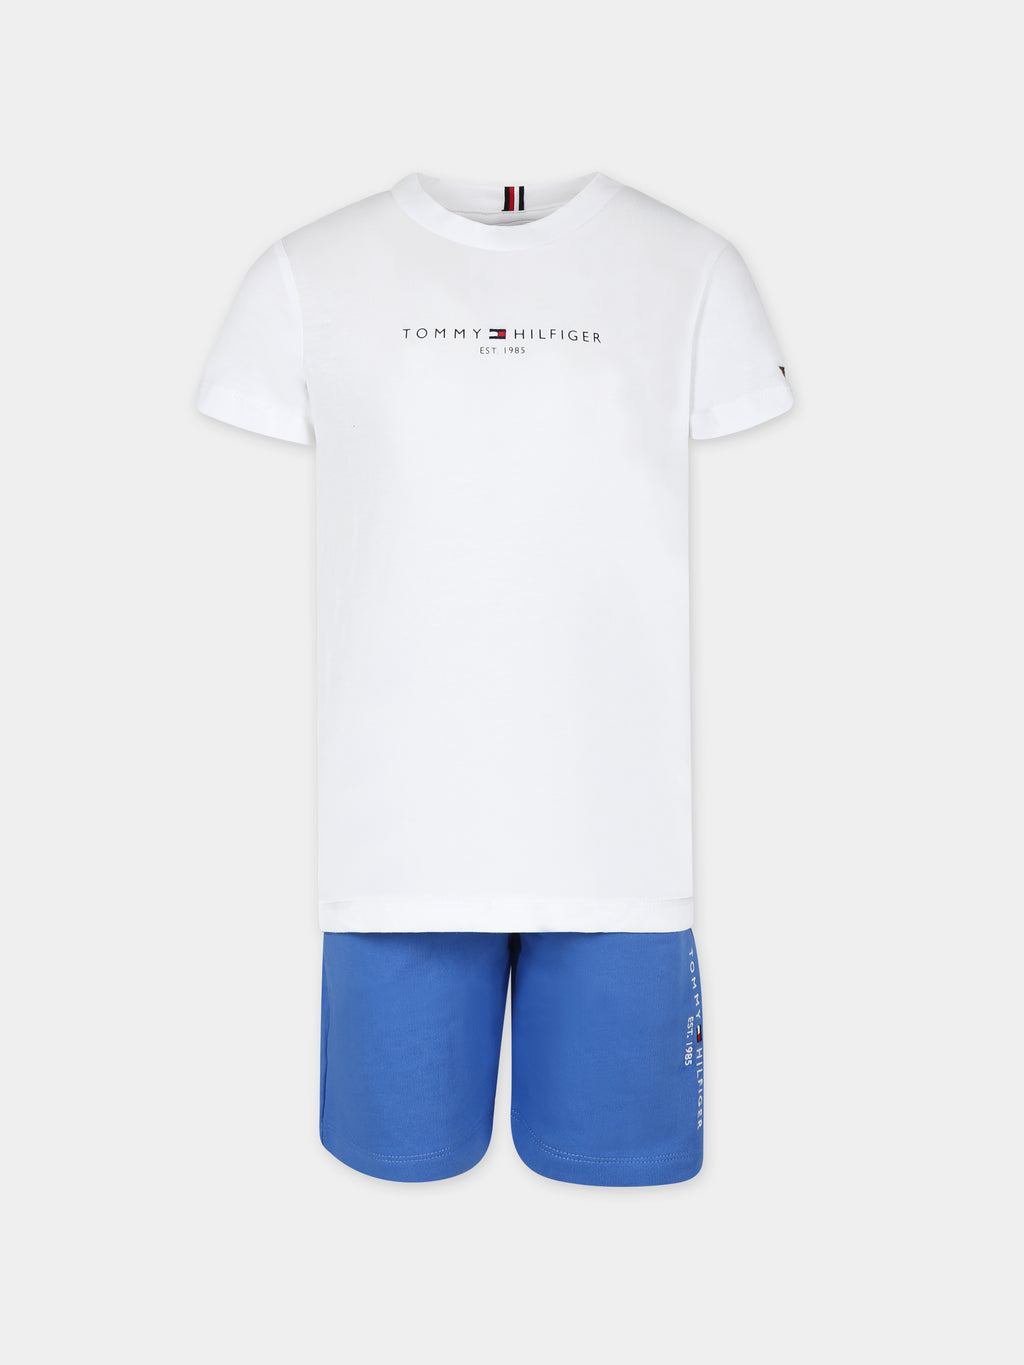 T-shirt blanc pour garçon avec logo